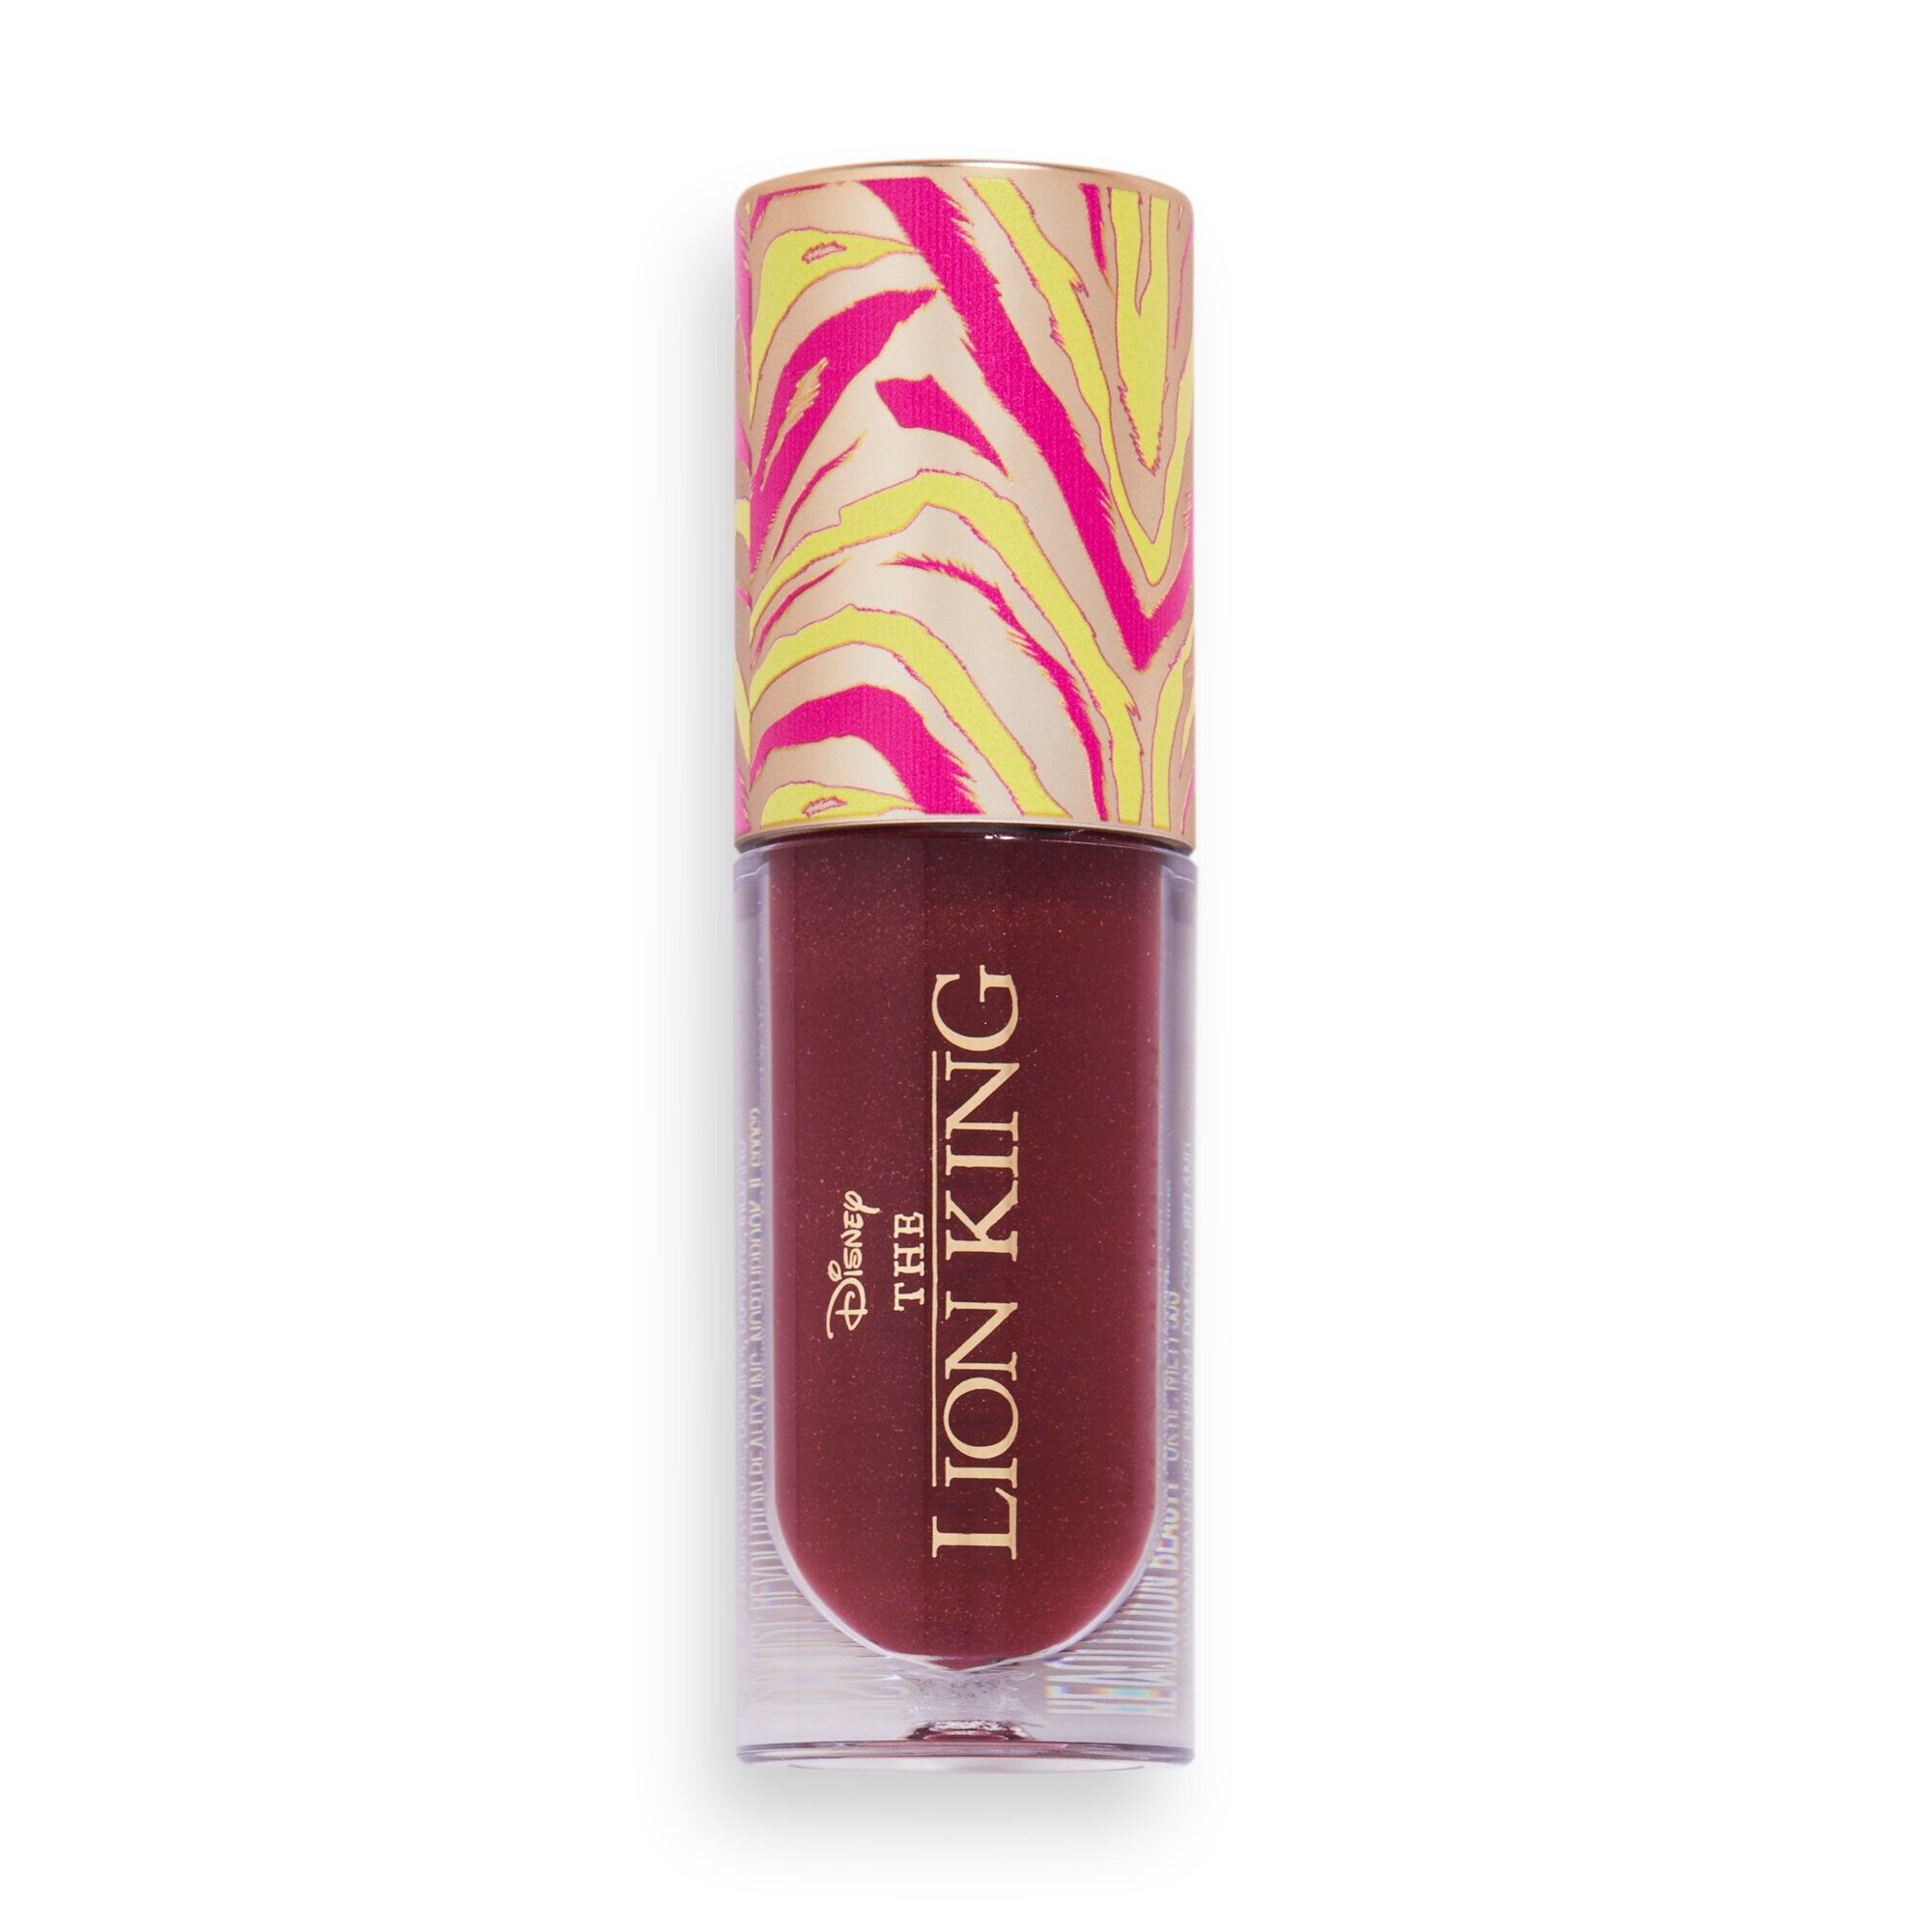 Makeup Revolution x The Lion King - Lip Gloss